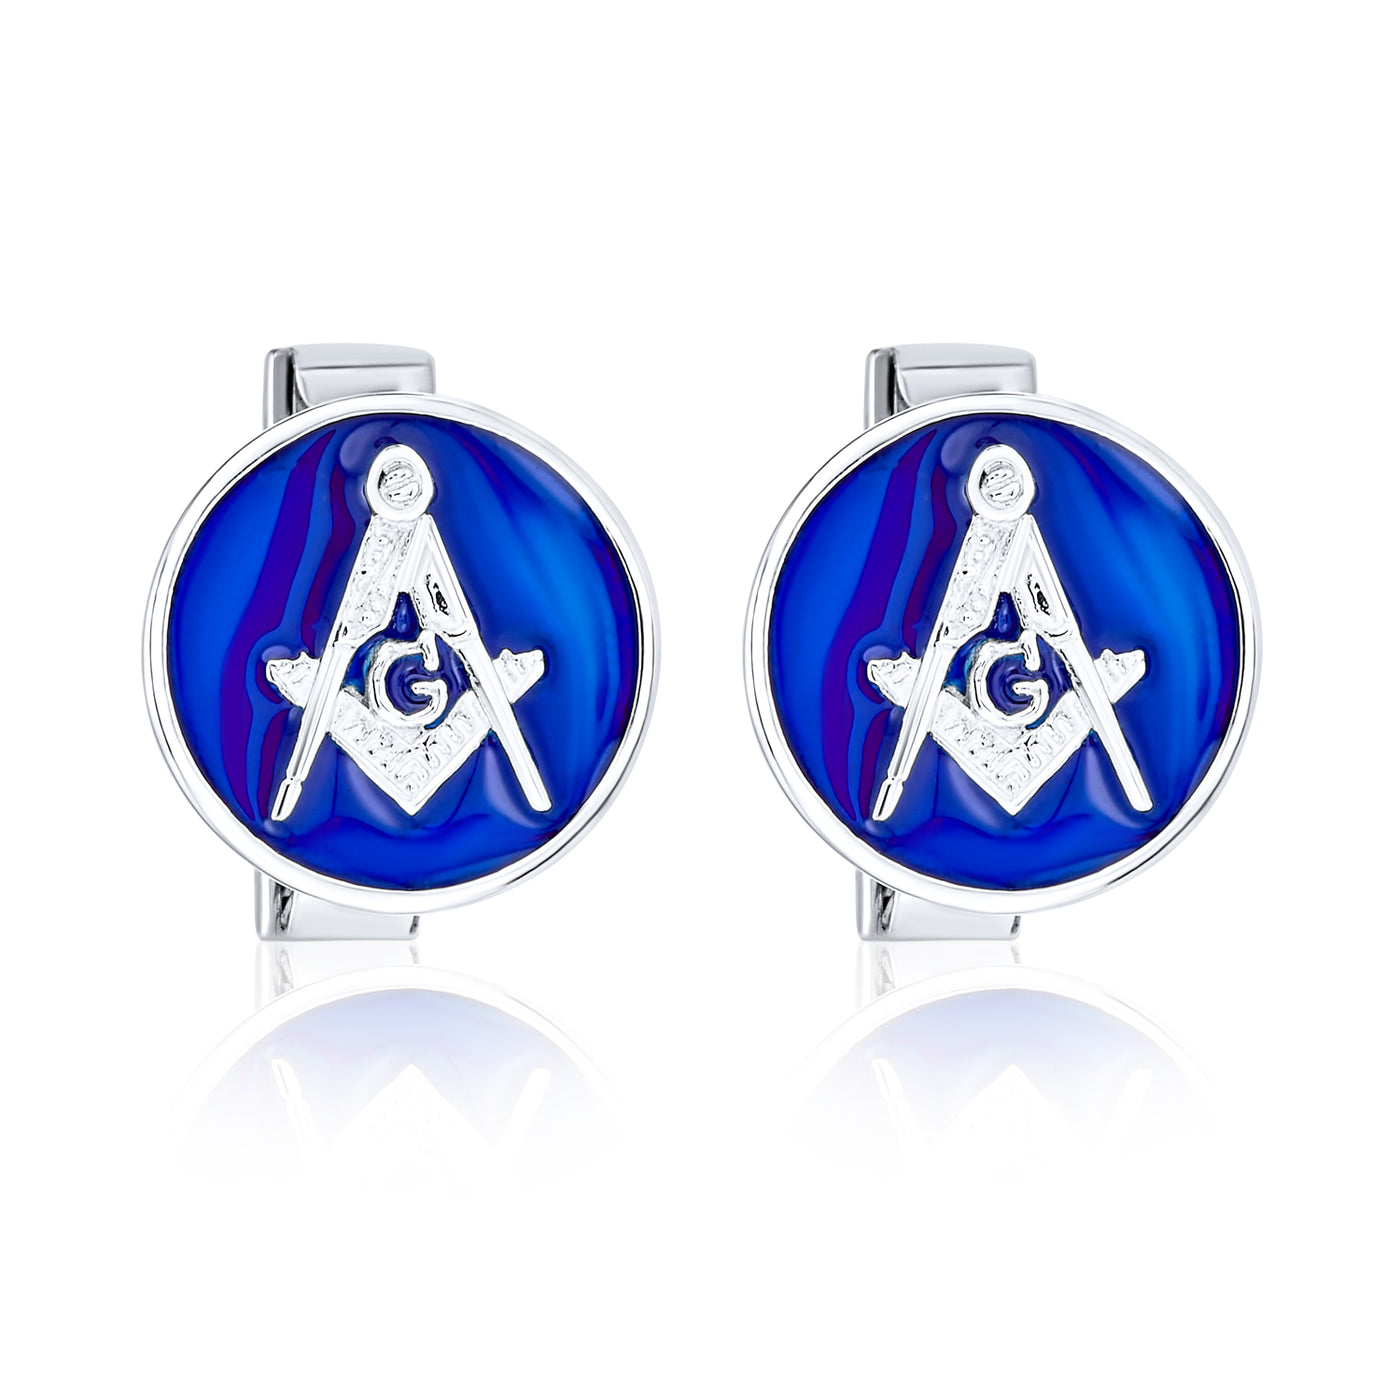 Freemasons Masonic Compass Circle Cufflinks Blue Sterling Silver